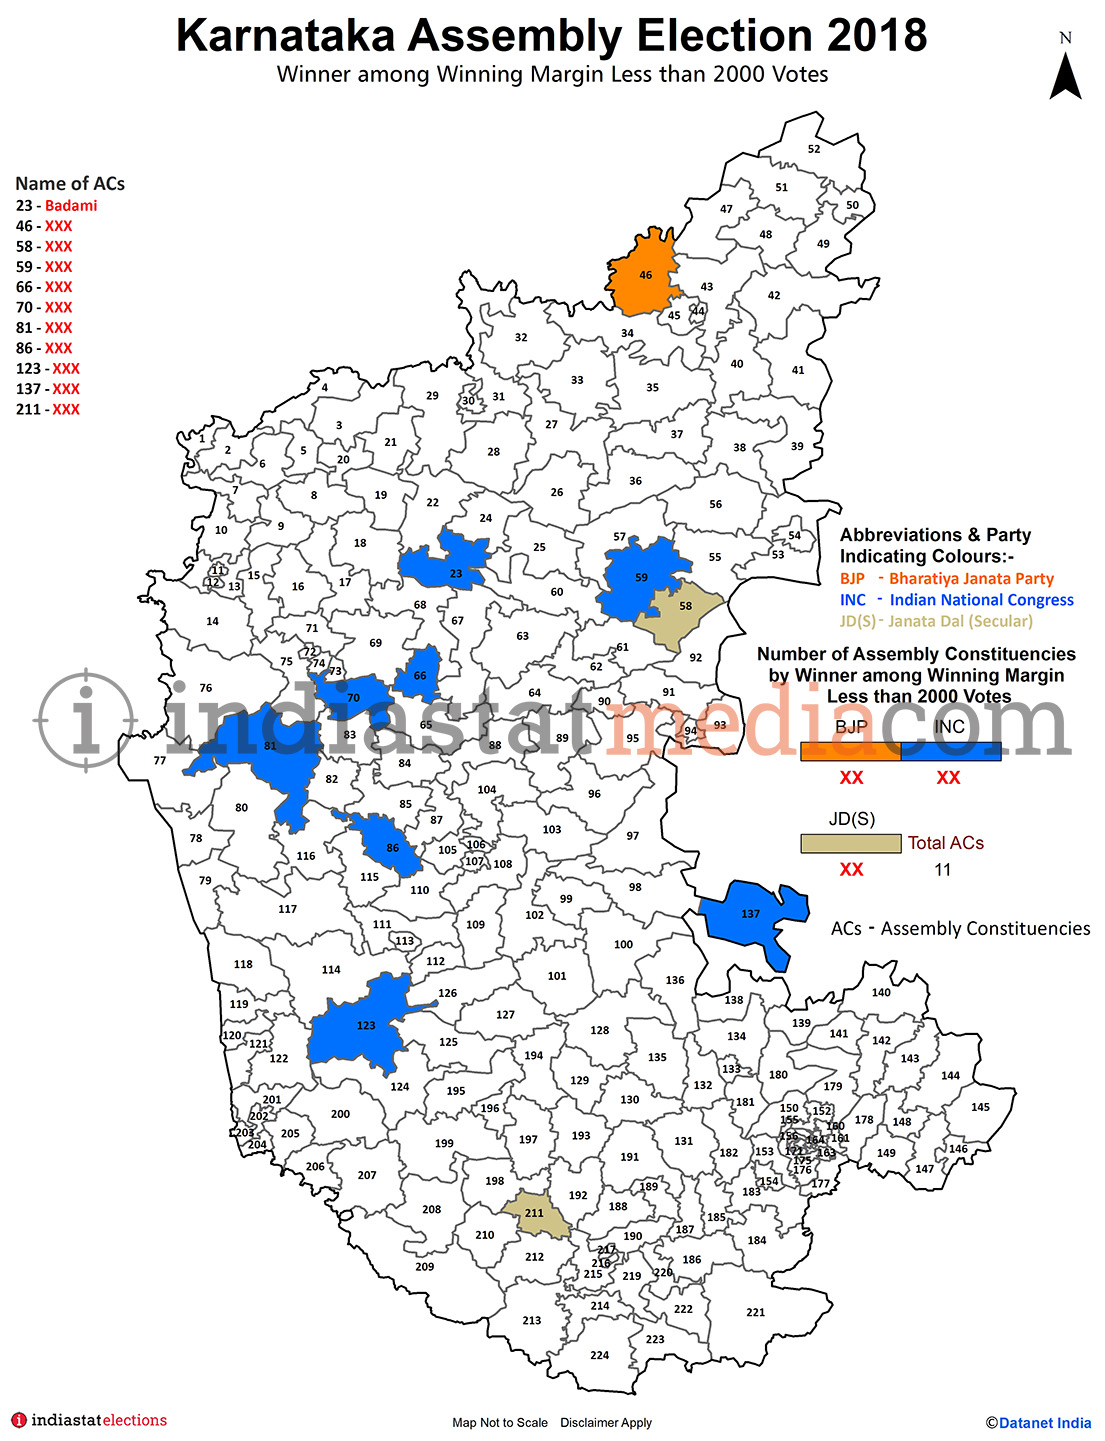 Winner among Winning Margin Less than 2000 Votes in Karnataka (Assembly Election - 2018)